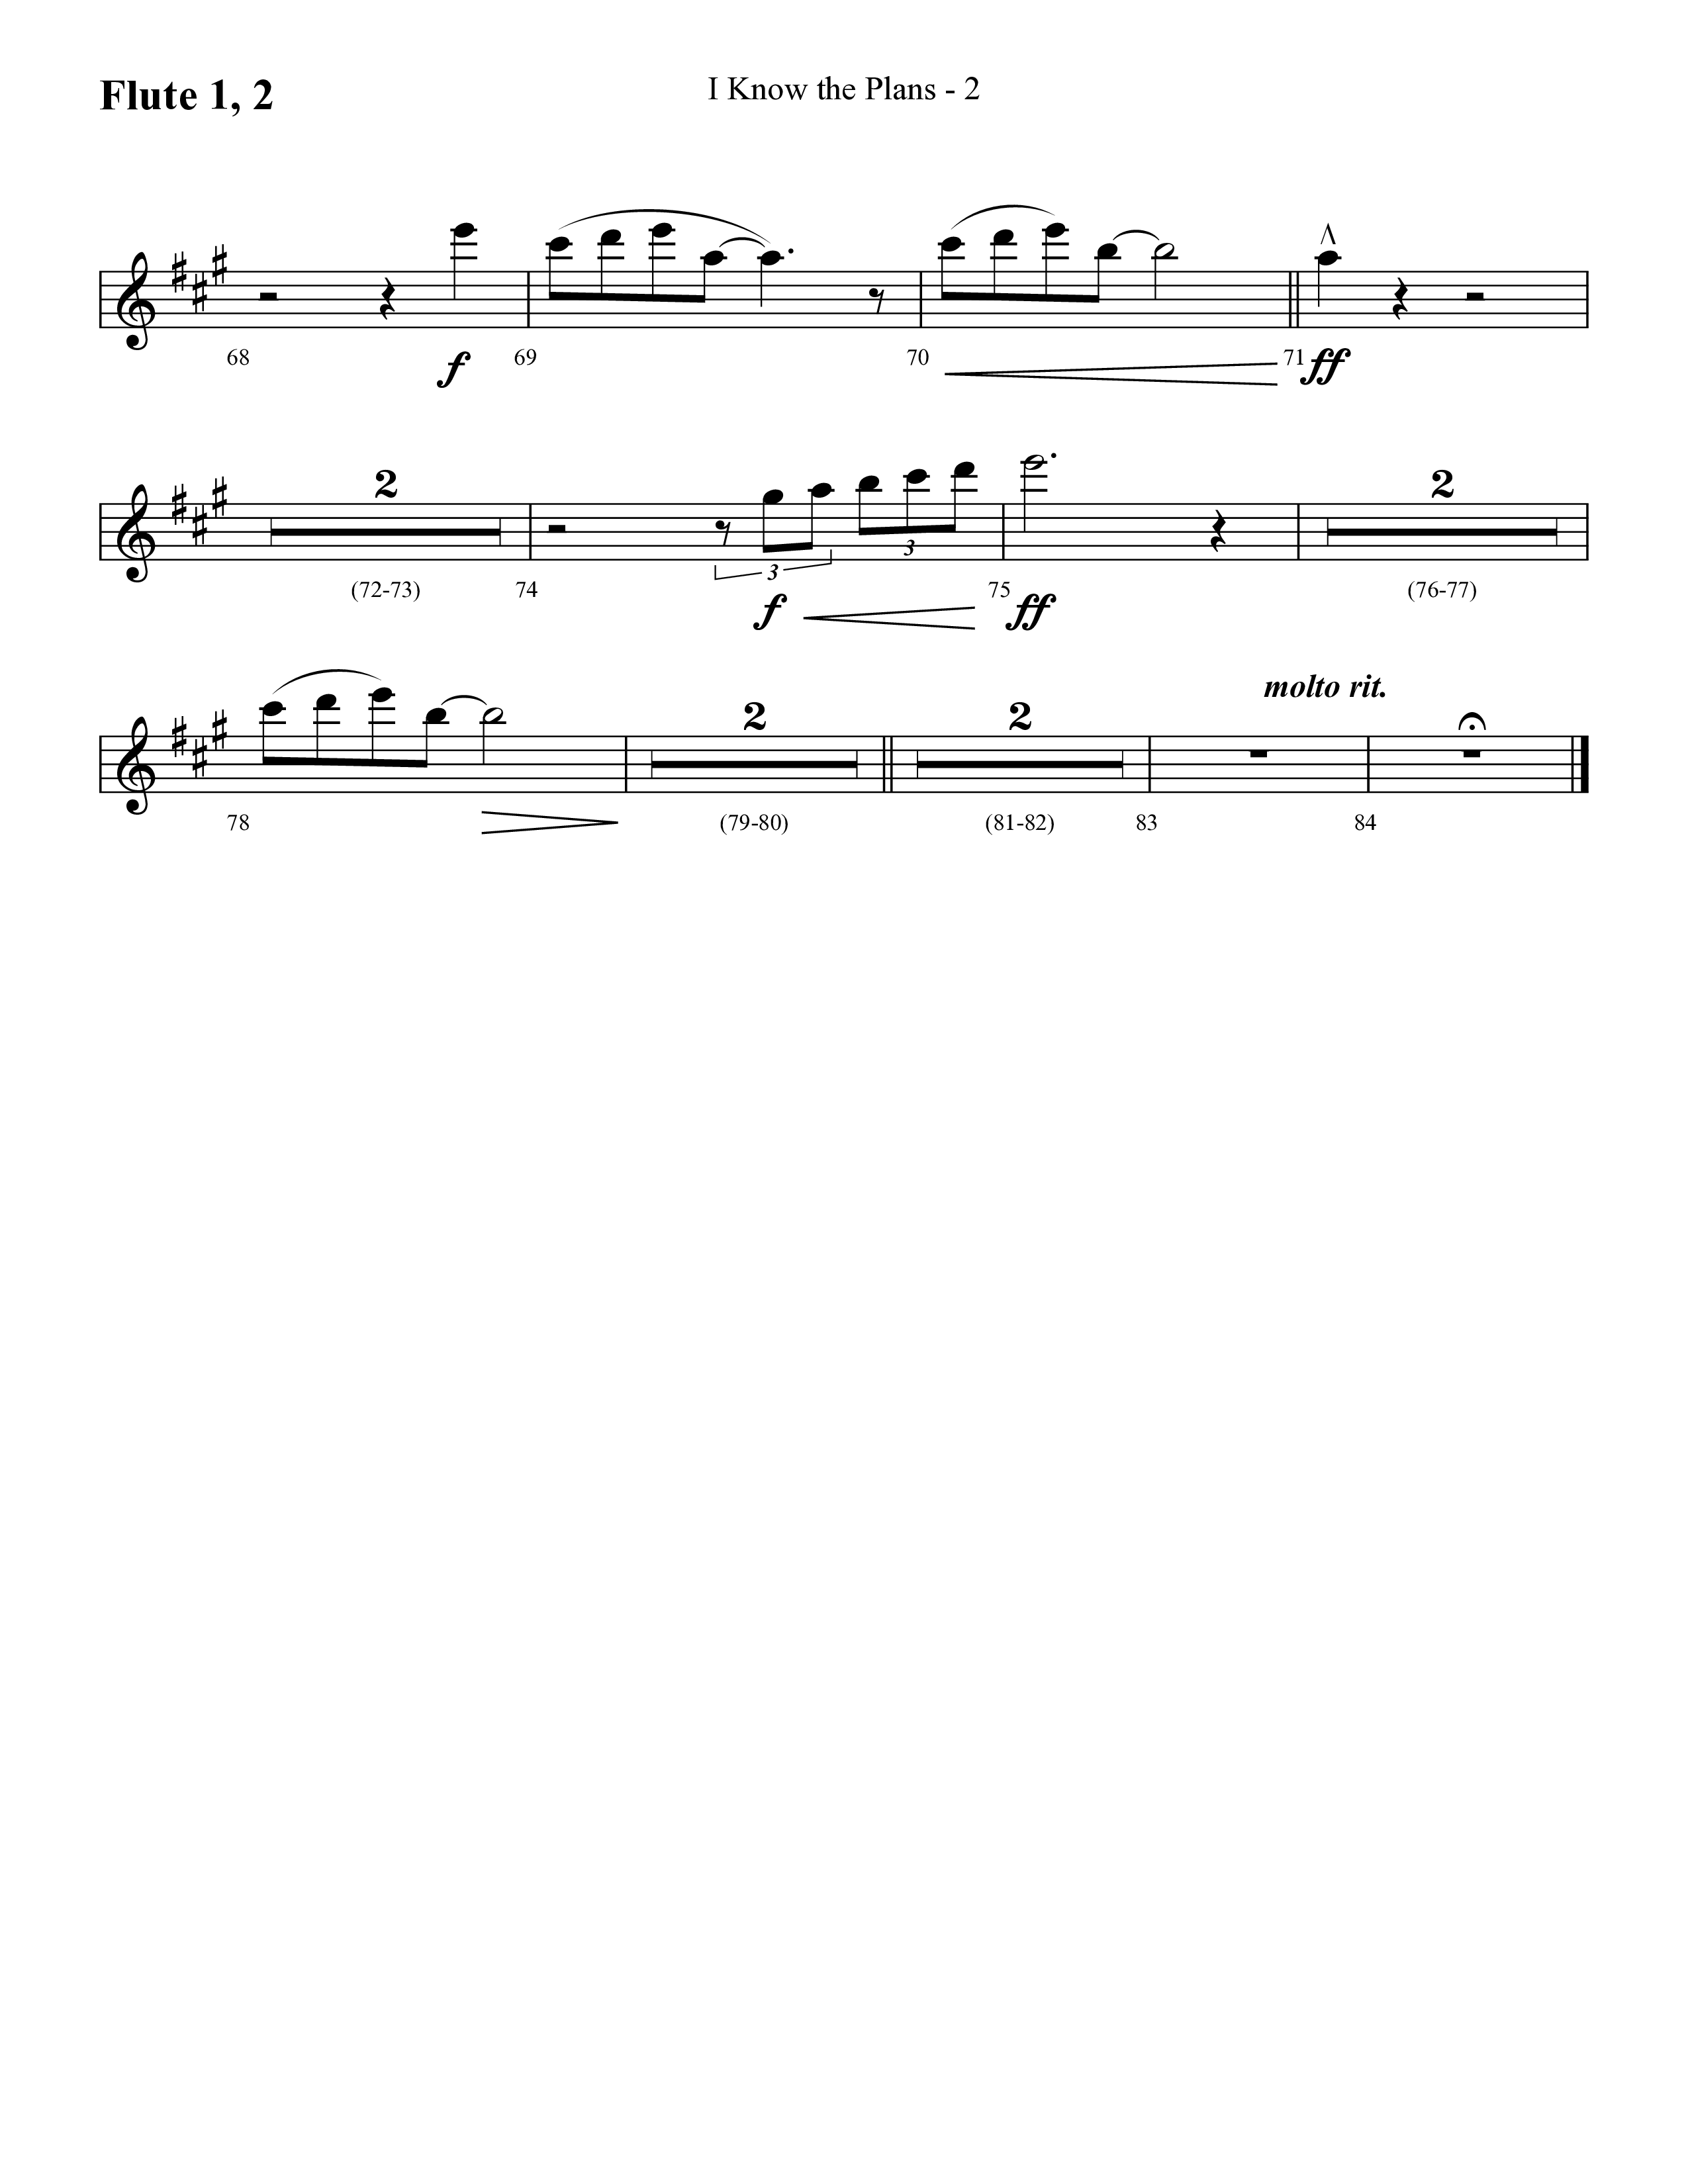 I Know The Plans (Choral Anthem SATB) Flute 1/2 (Lifeway Choral / Arr. Cliff Duren)